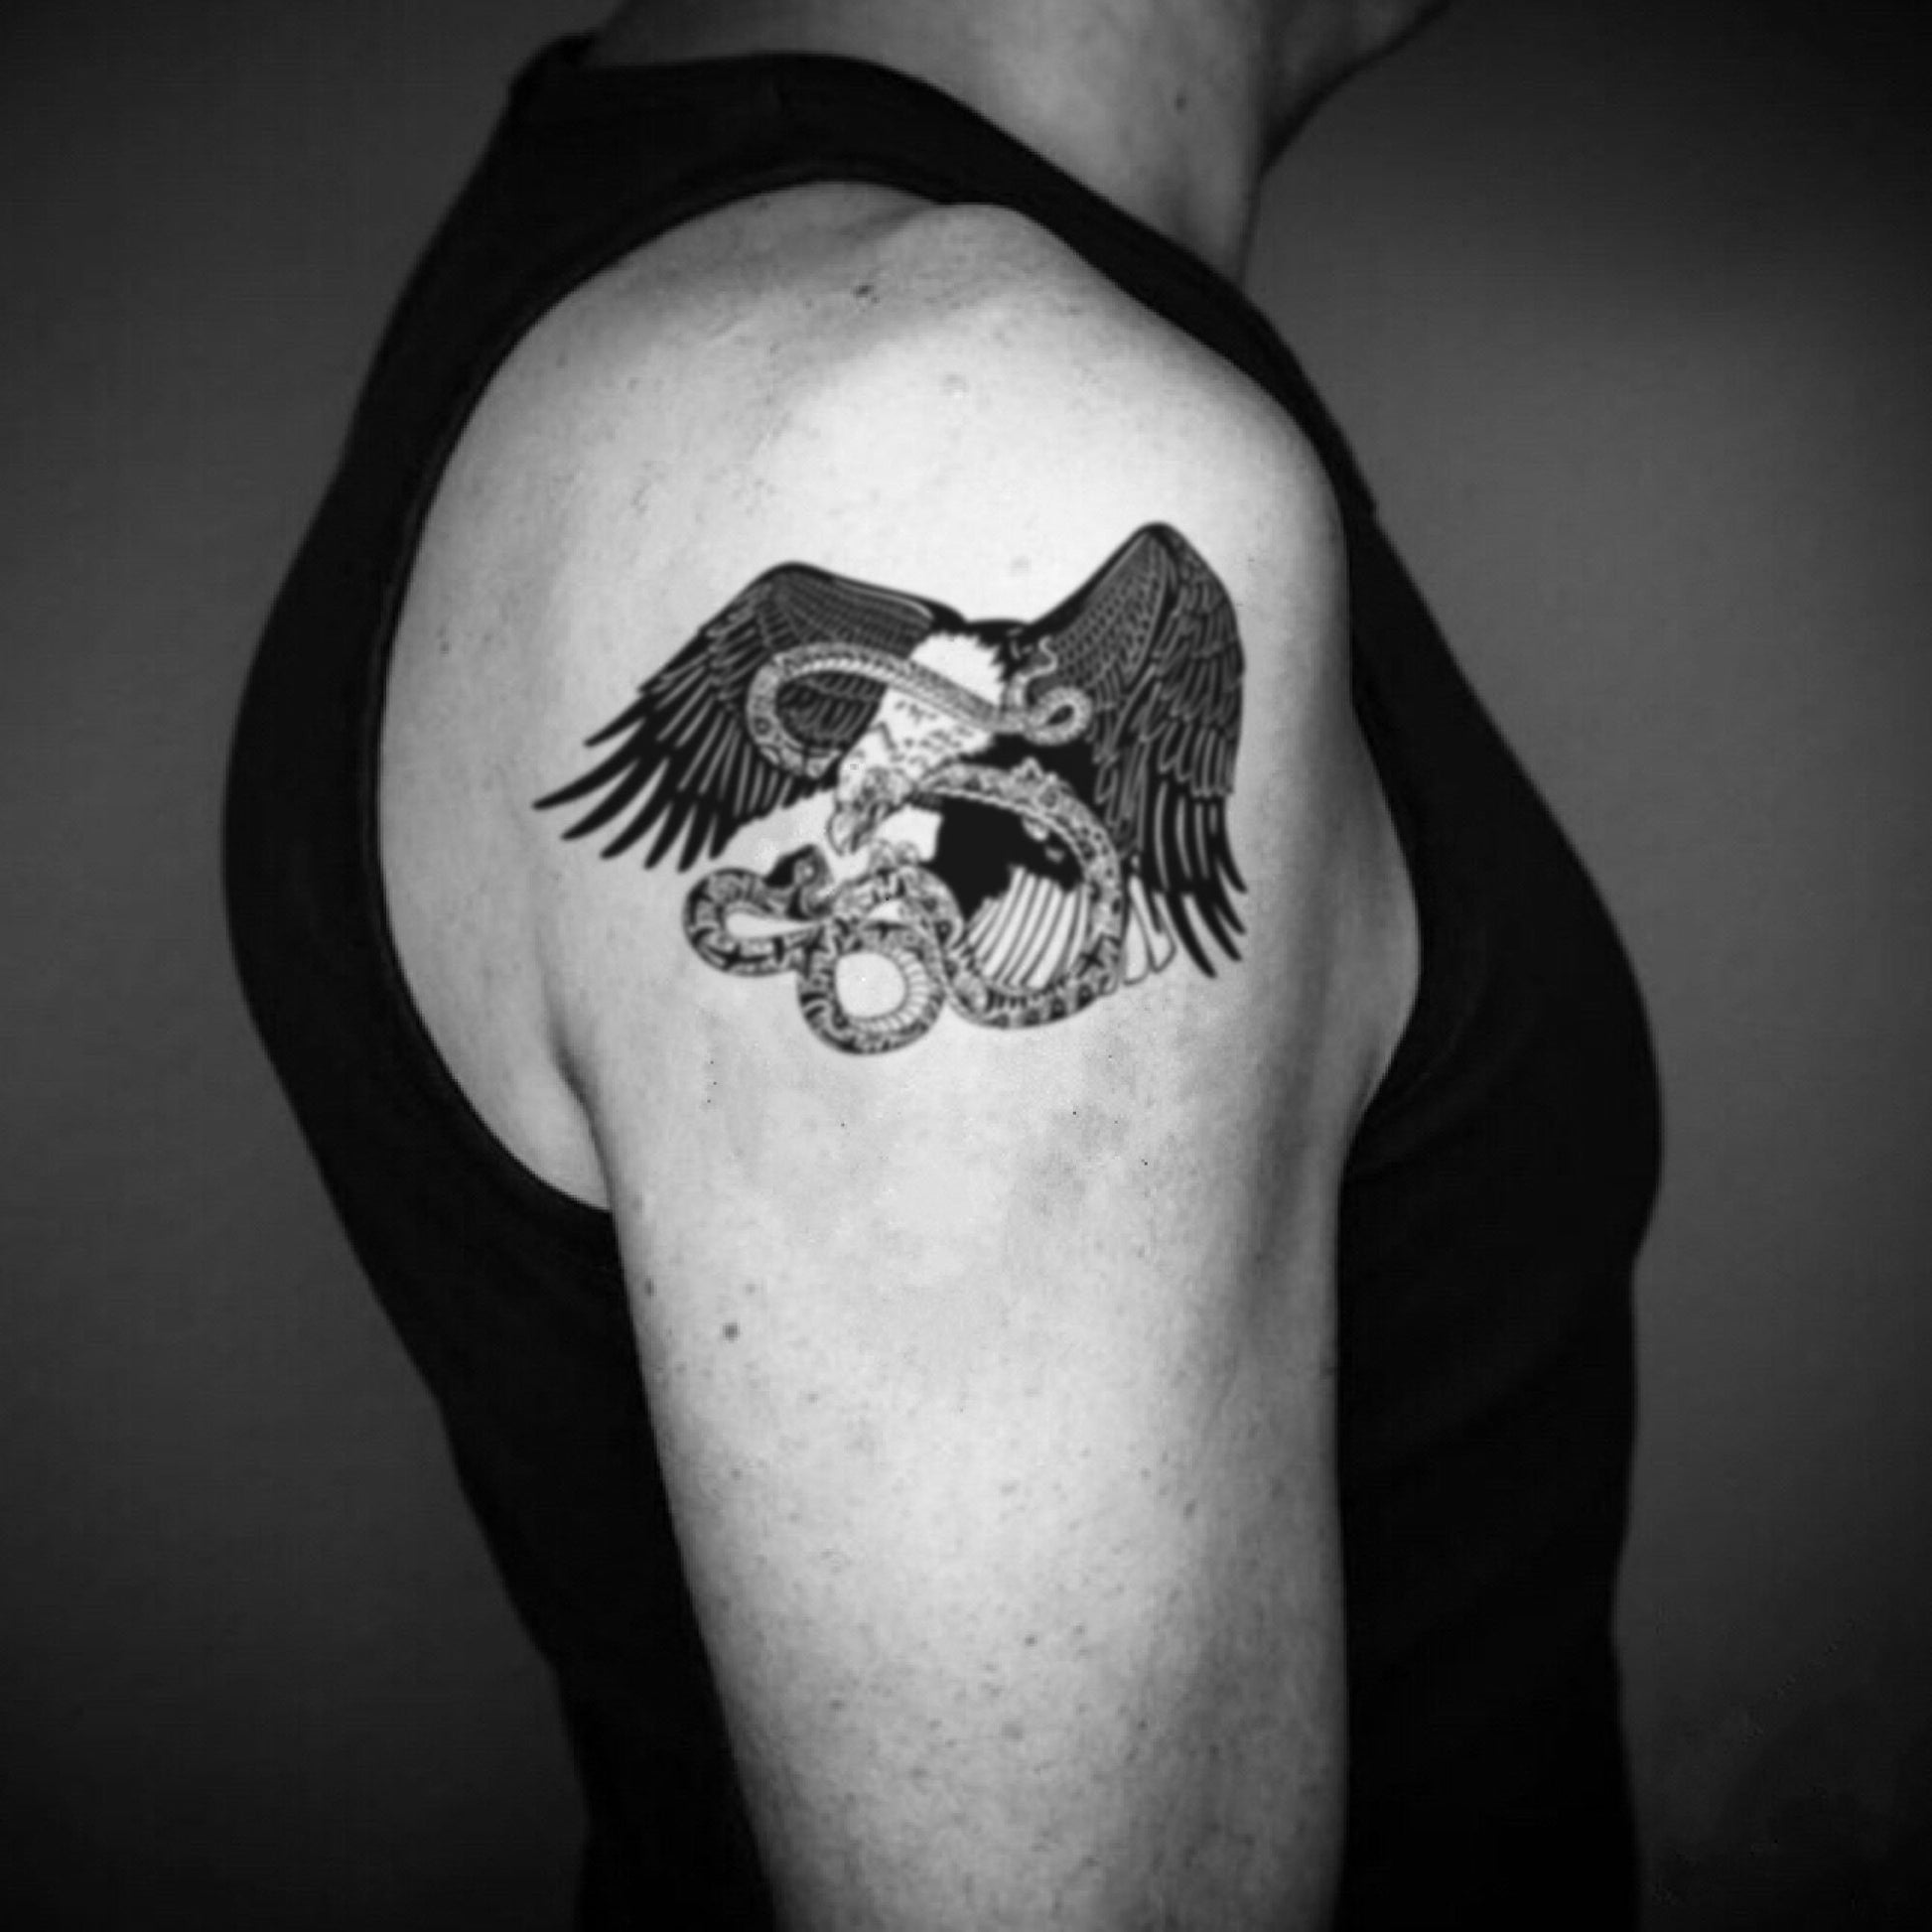 fake big eagle snake Animal temporary tattoo sticker design idea on upper arm